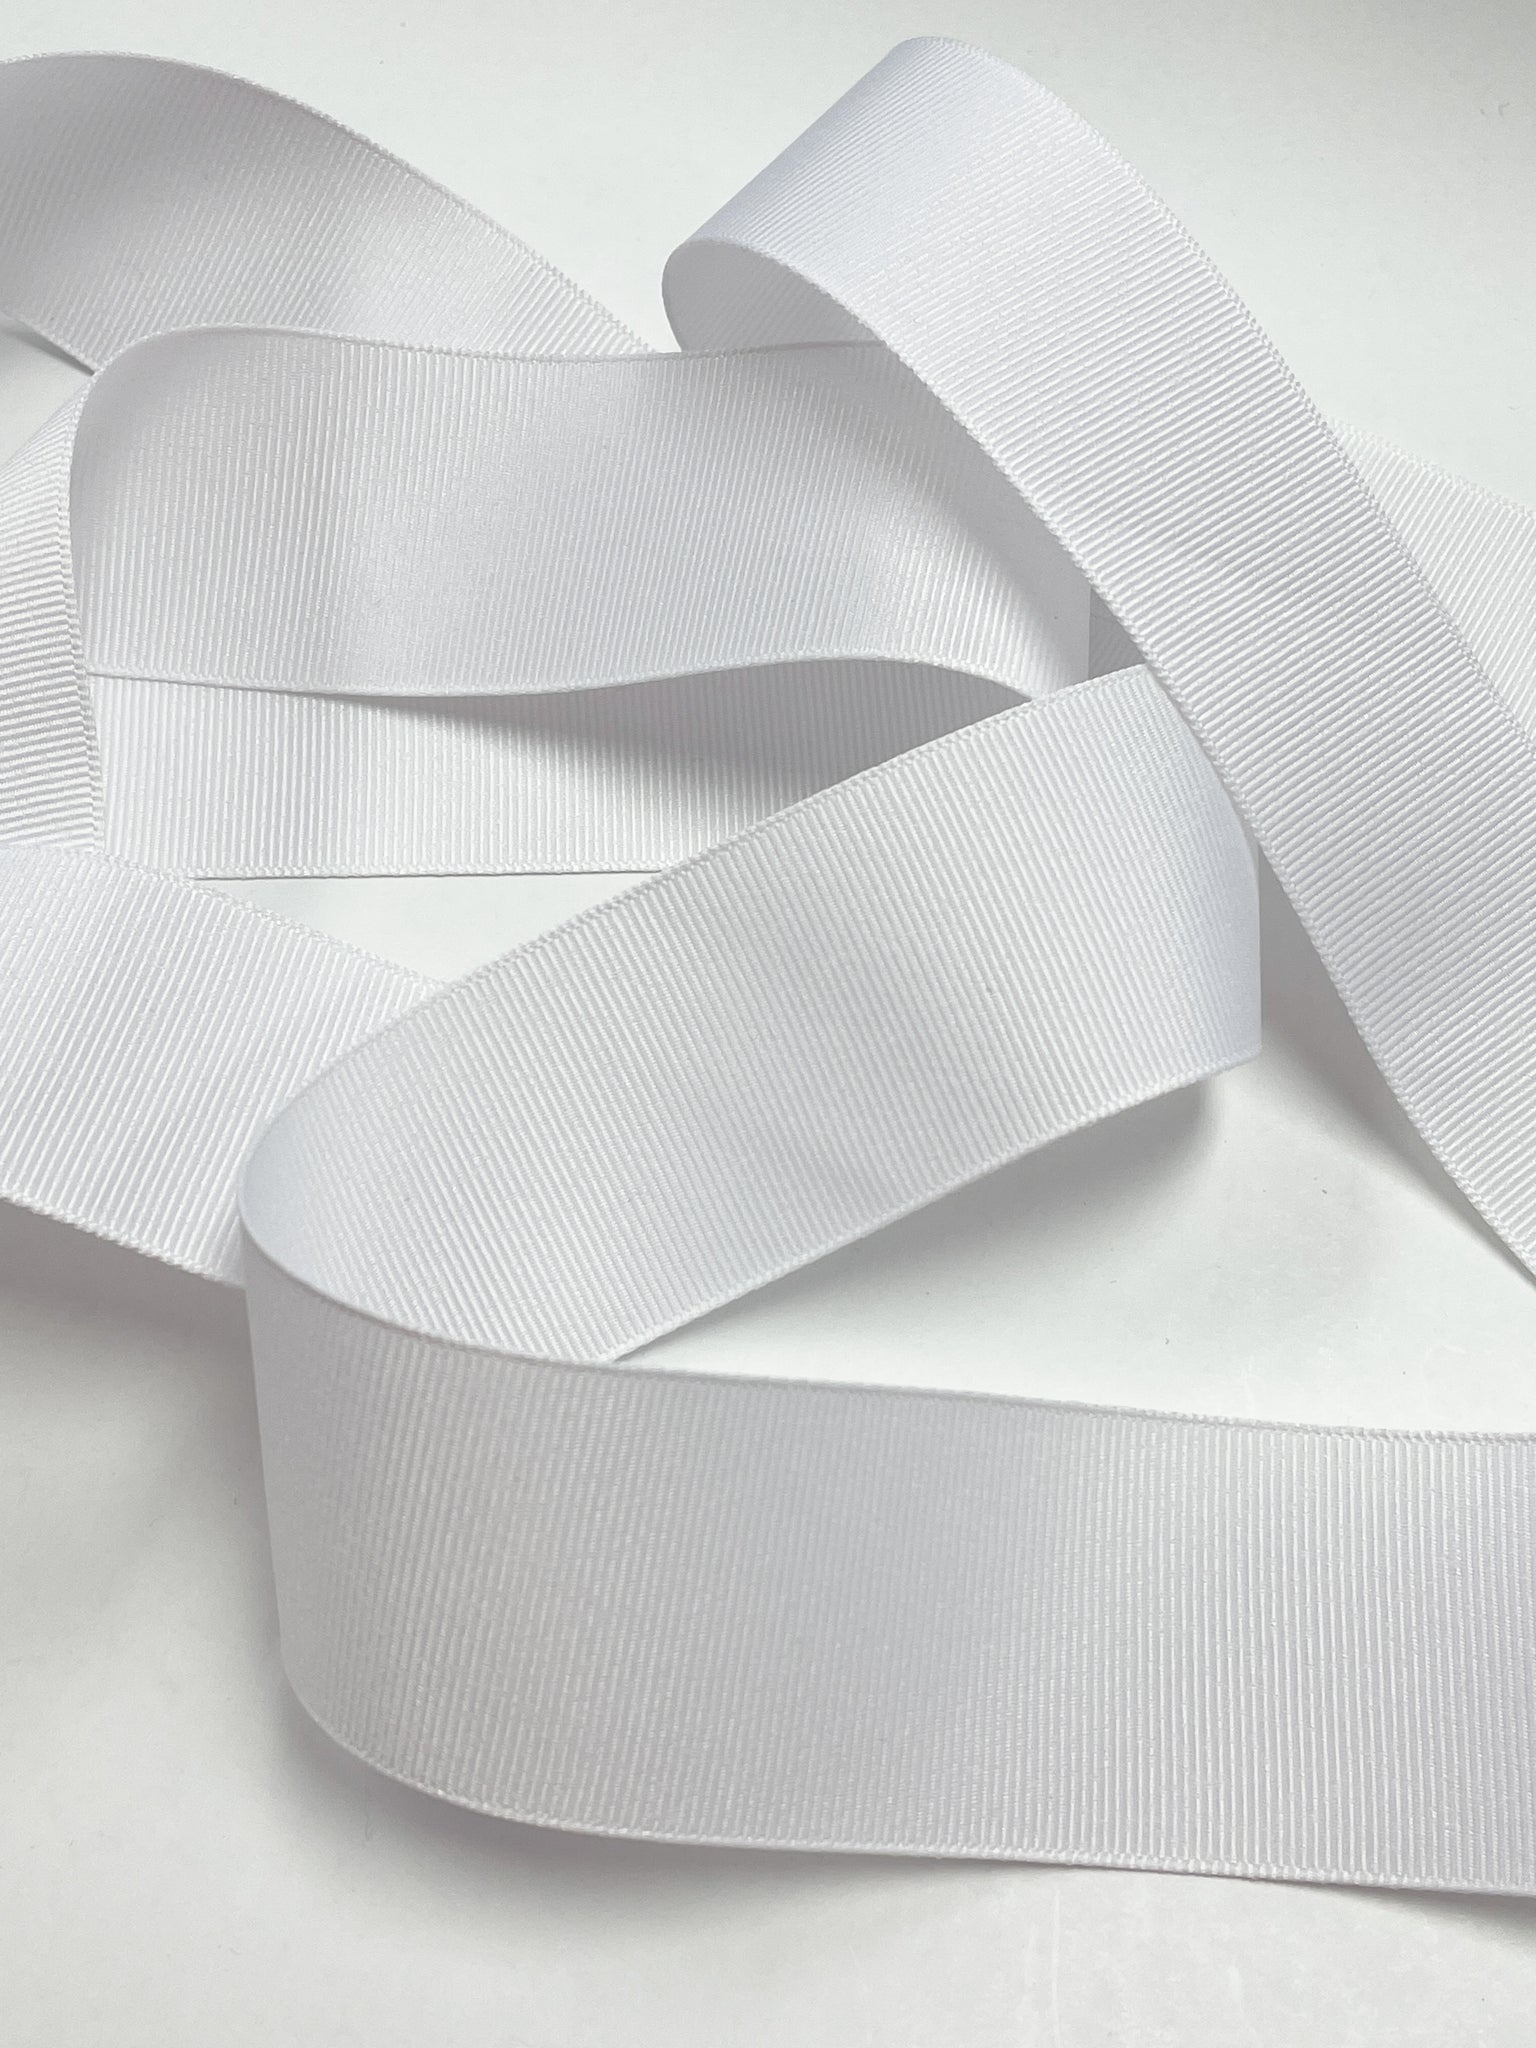 7 YD Polyester Grosgrain Ribbon - White